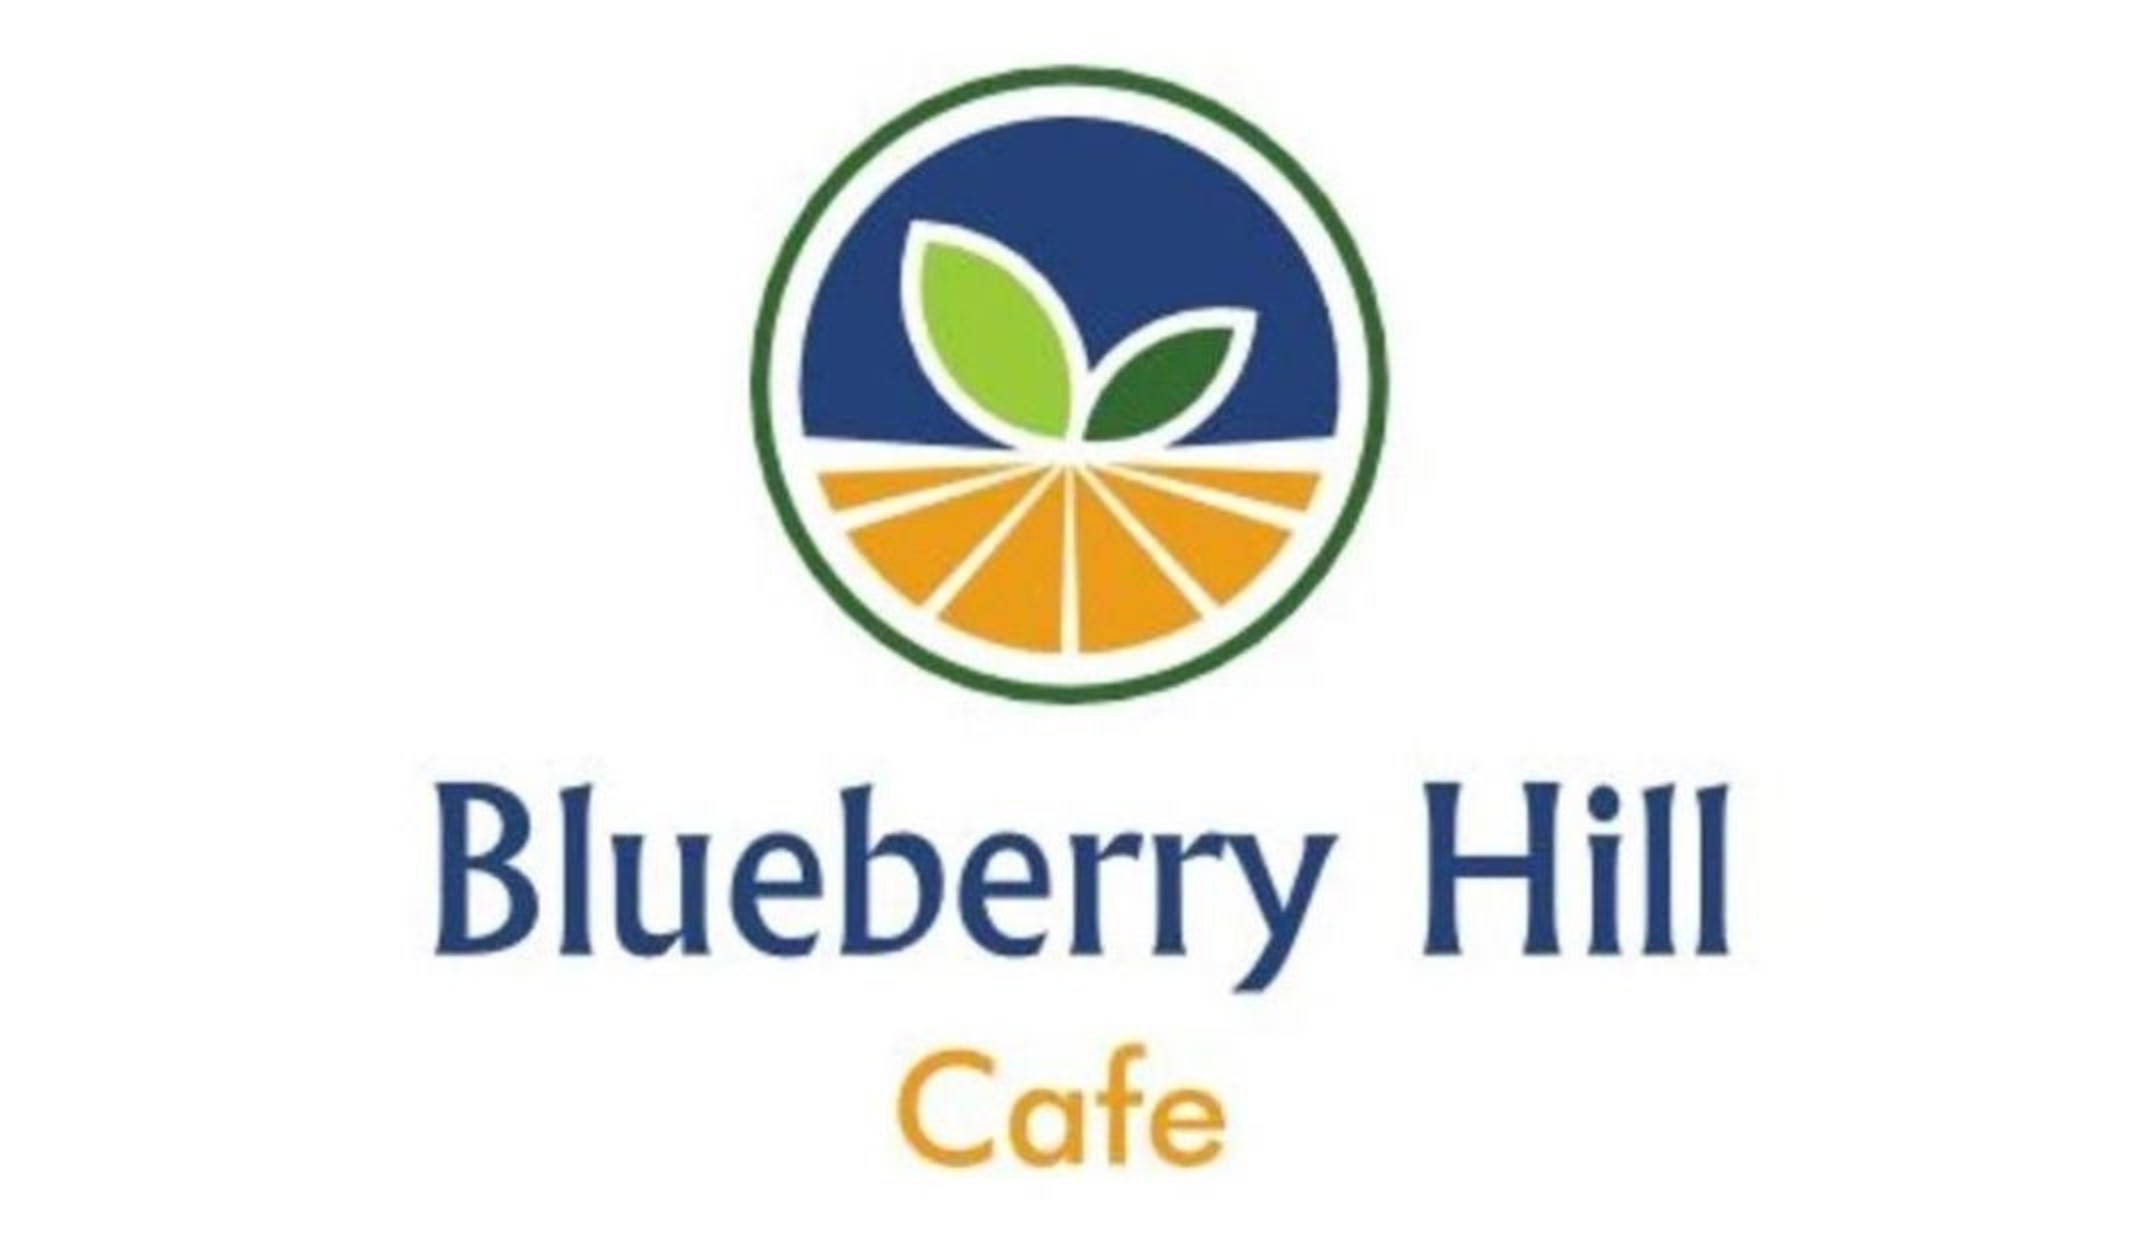 Blueberry Hill Cafe